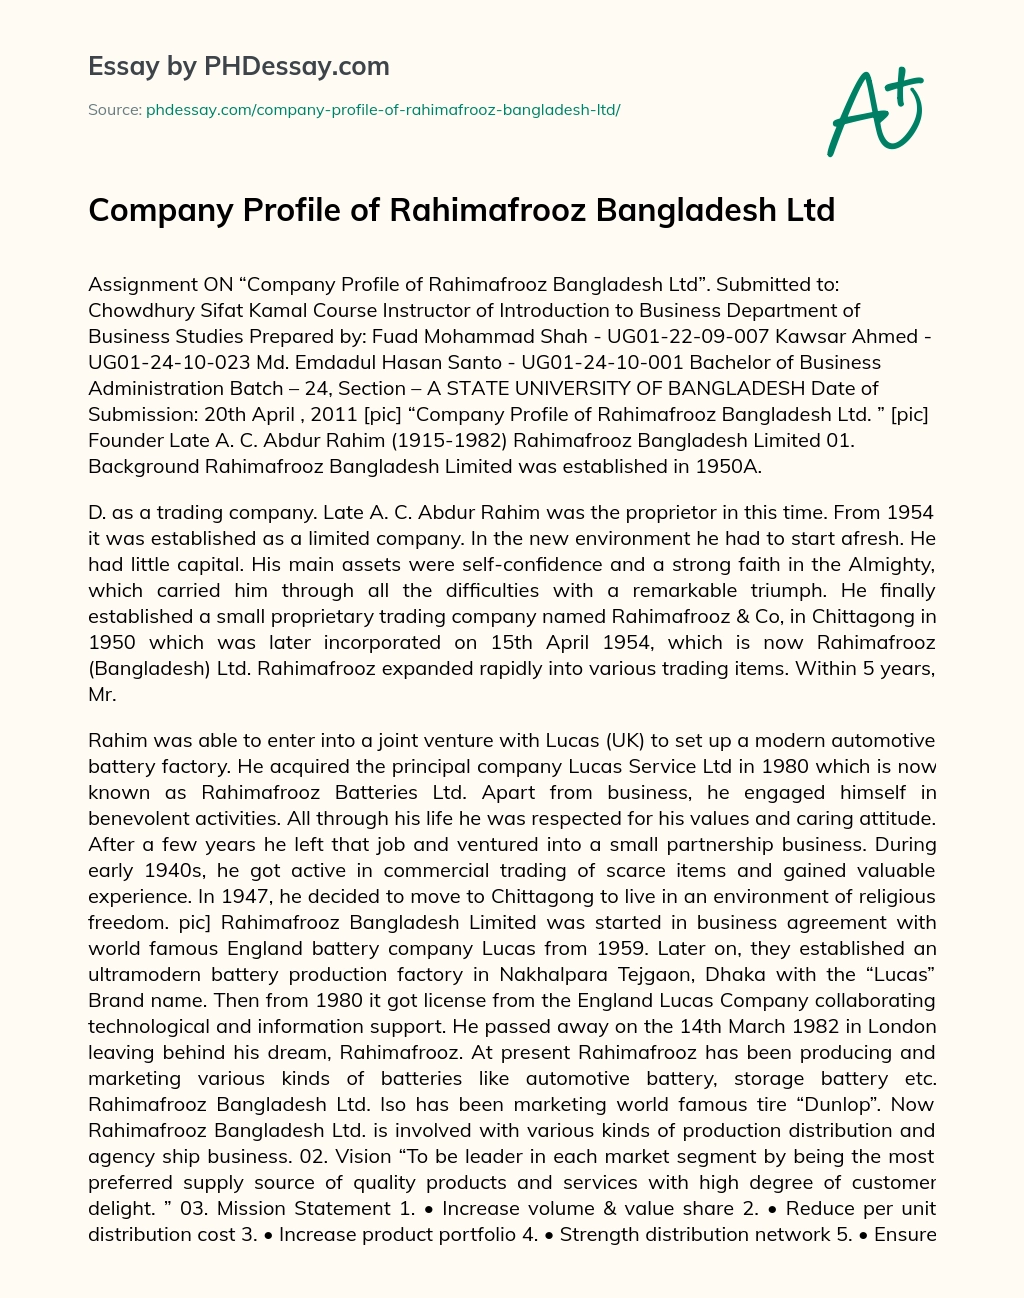 Company Profile of Rahimafrooz Bangladesh Ltd essay